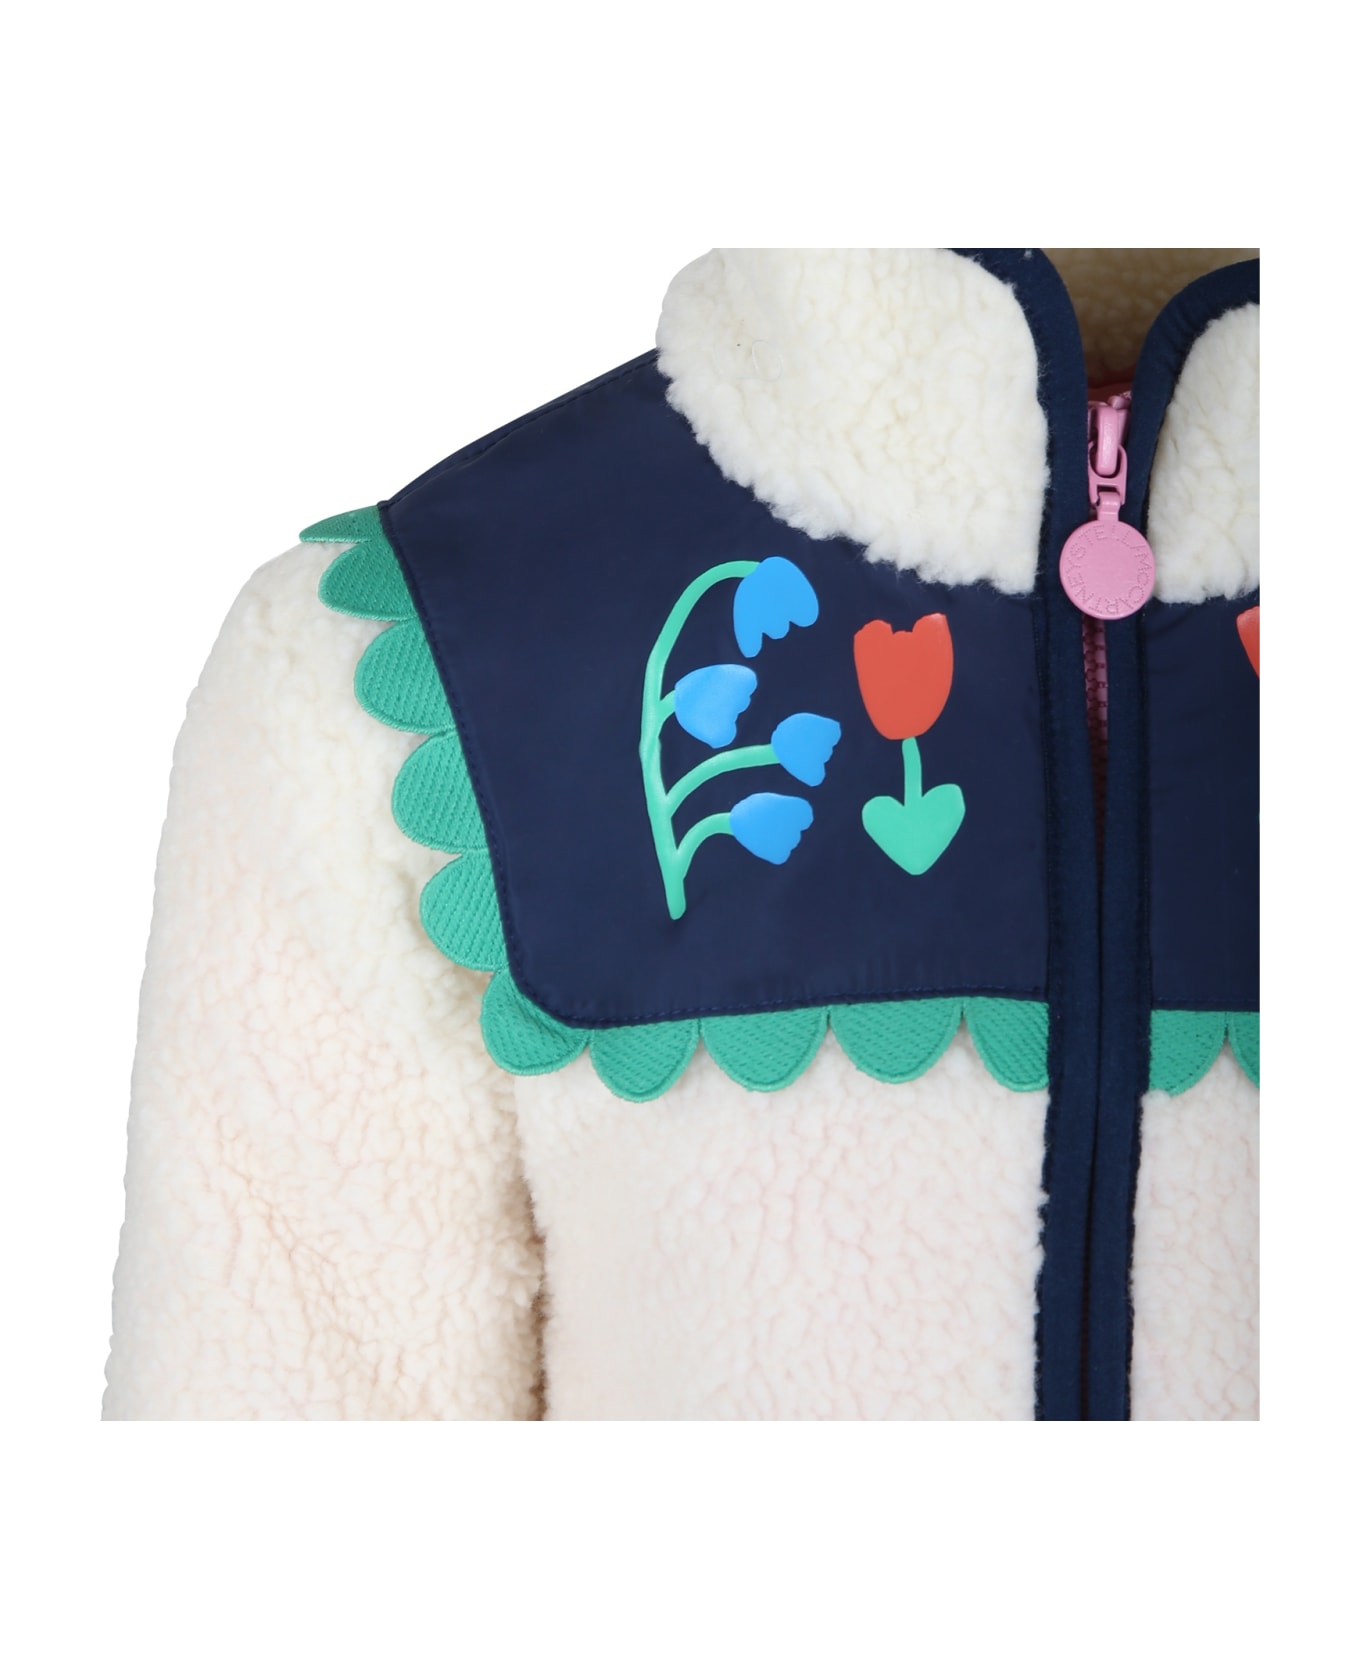 Stella McCartney Kids Ivory Jacket For Girl With Flowers - Ivory